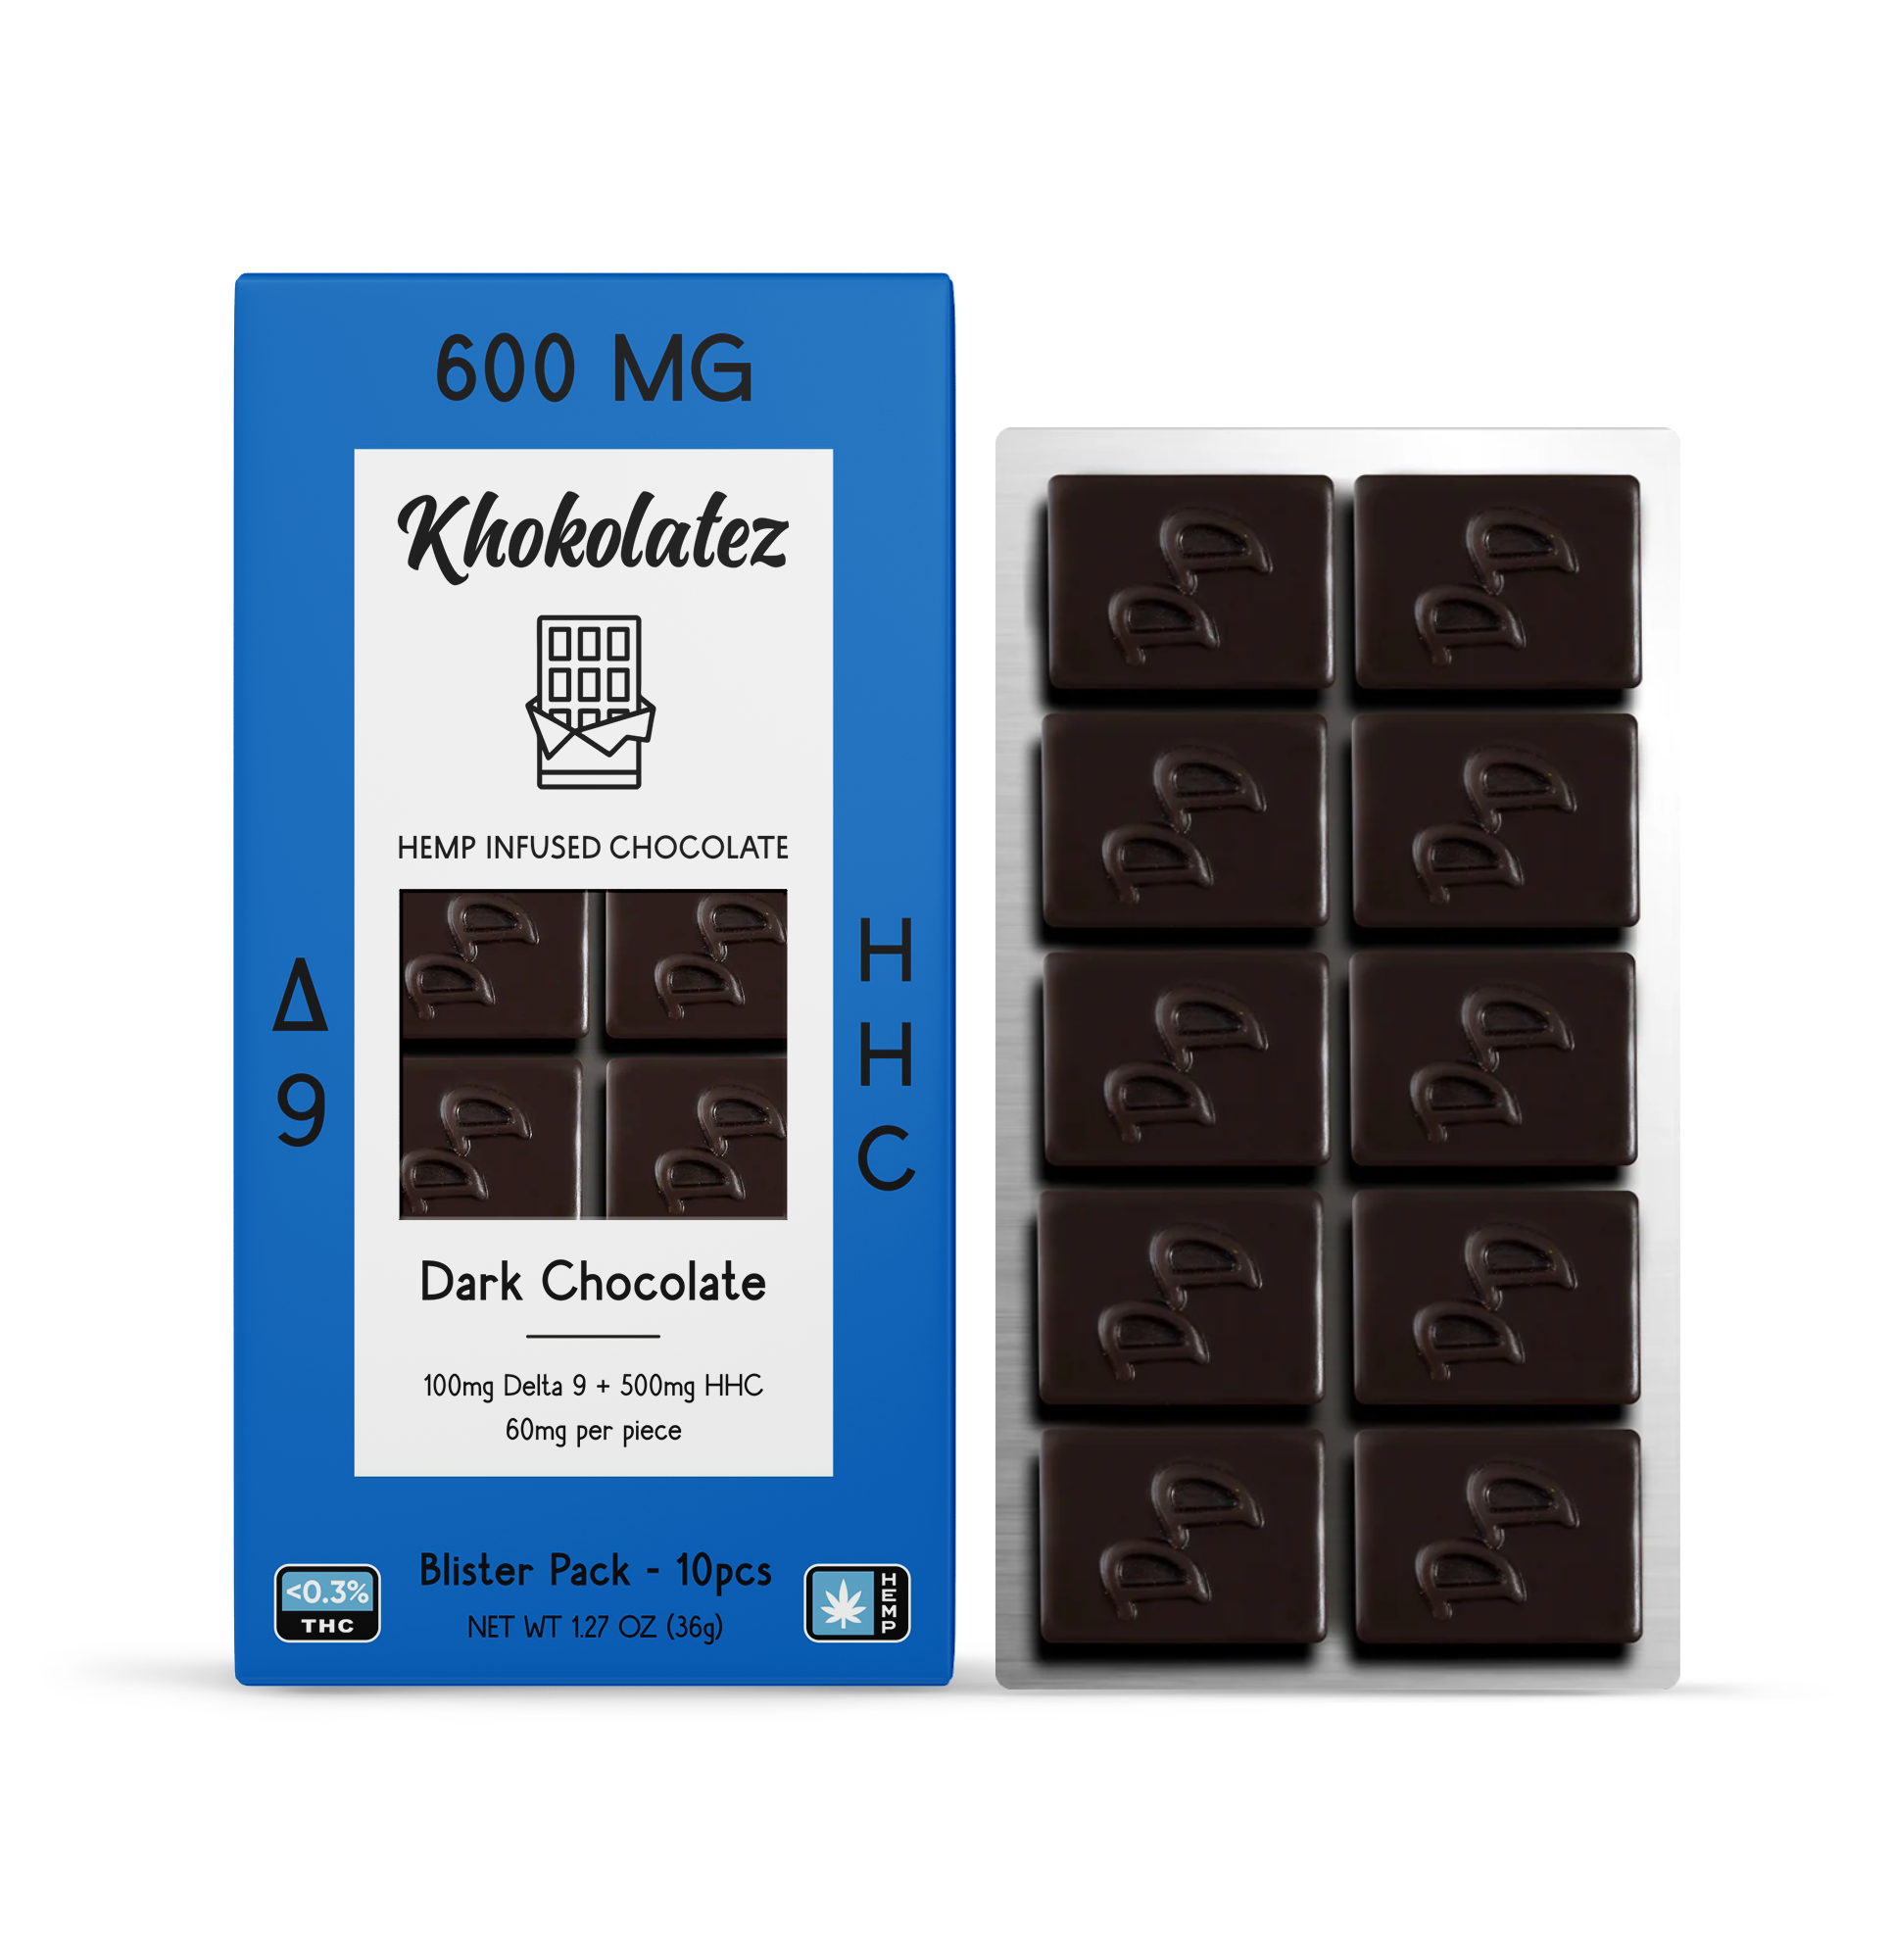 Khokolatez Delta 9 + HHC Dark Chocolate - Unit